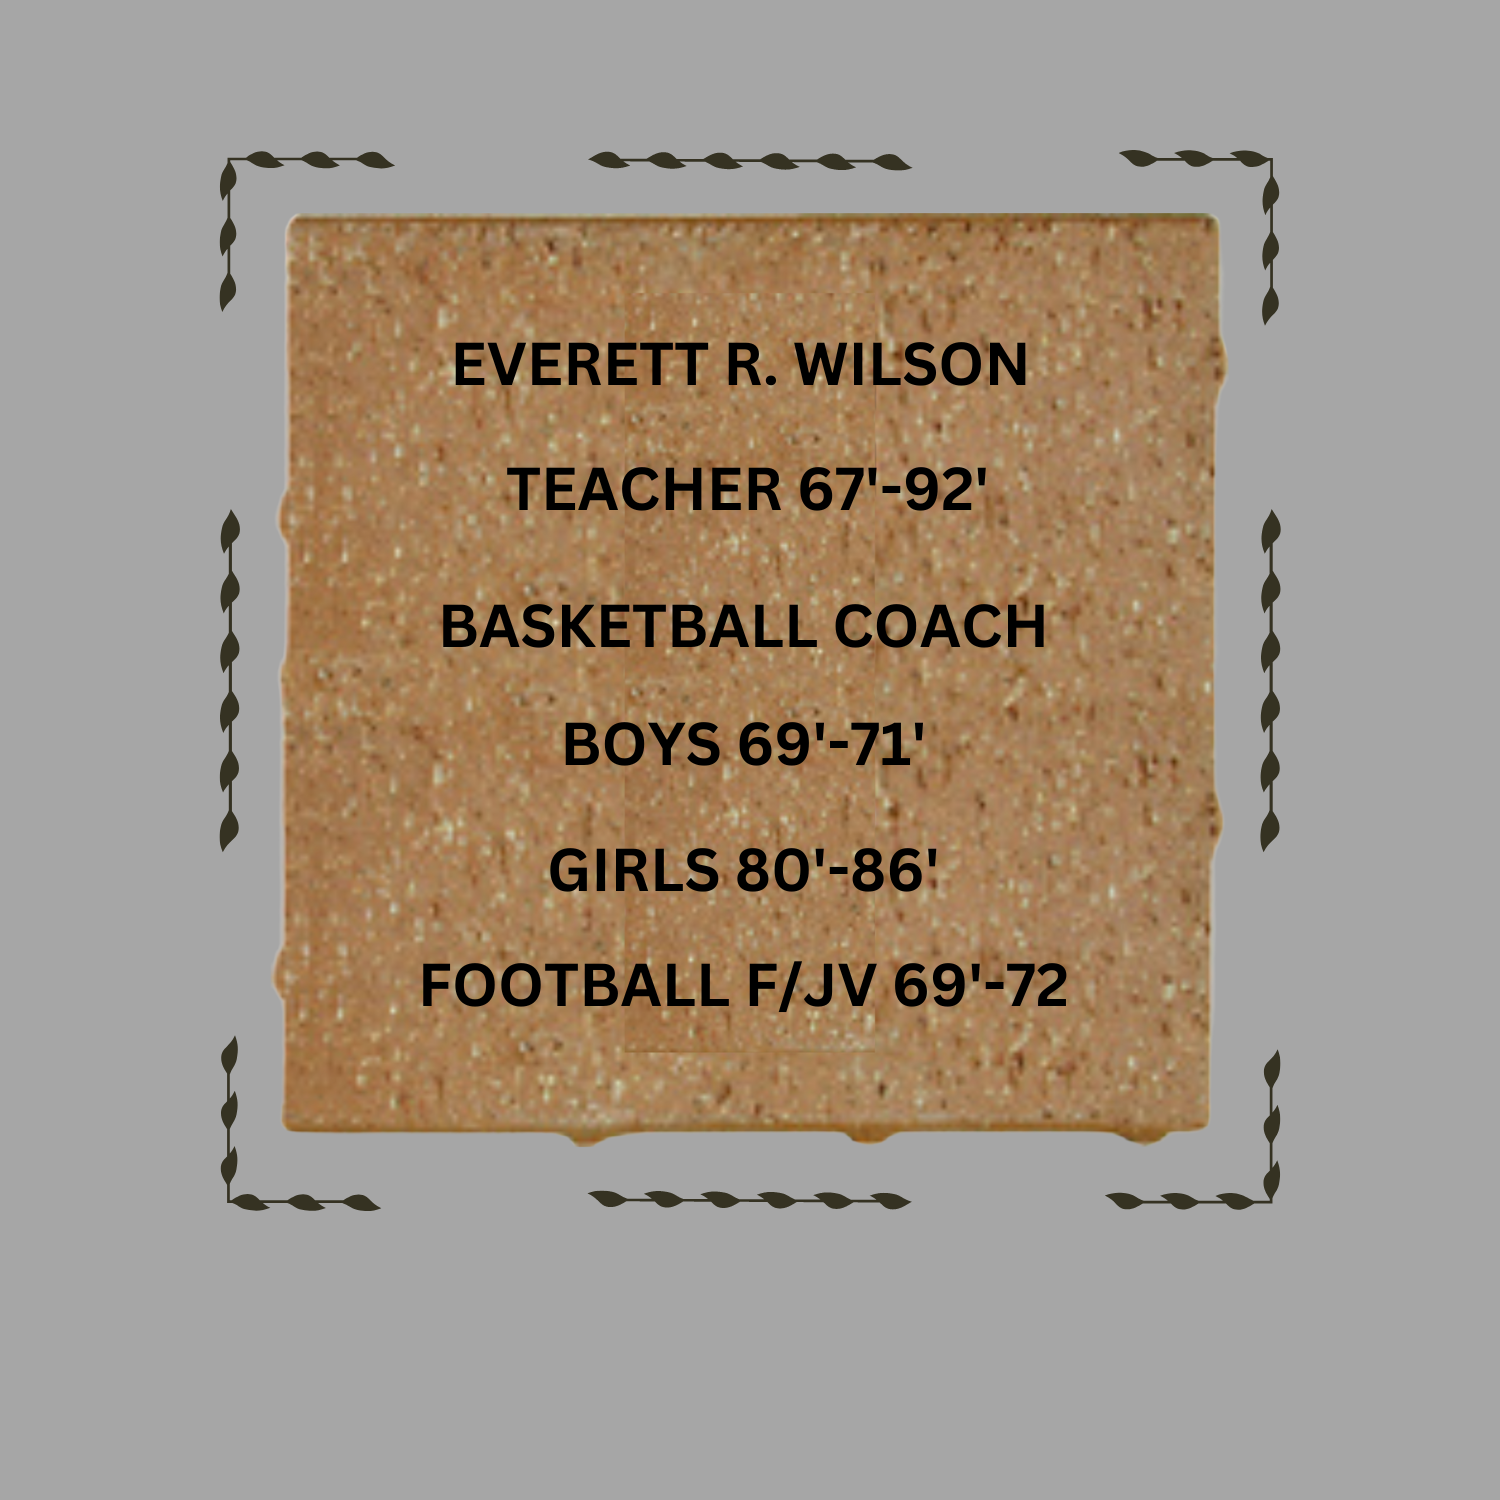 Everett Wilson